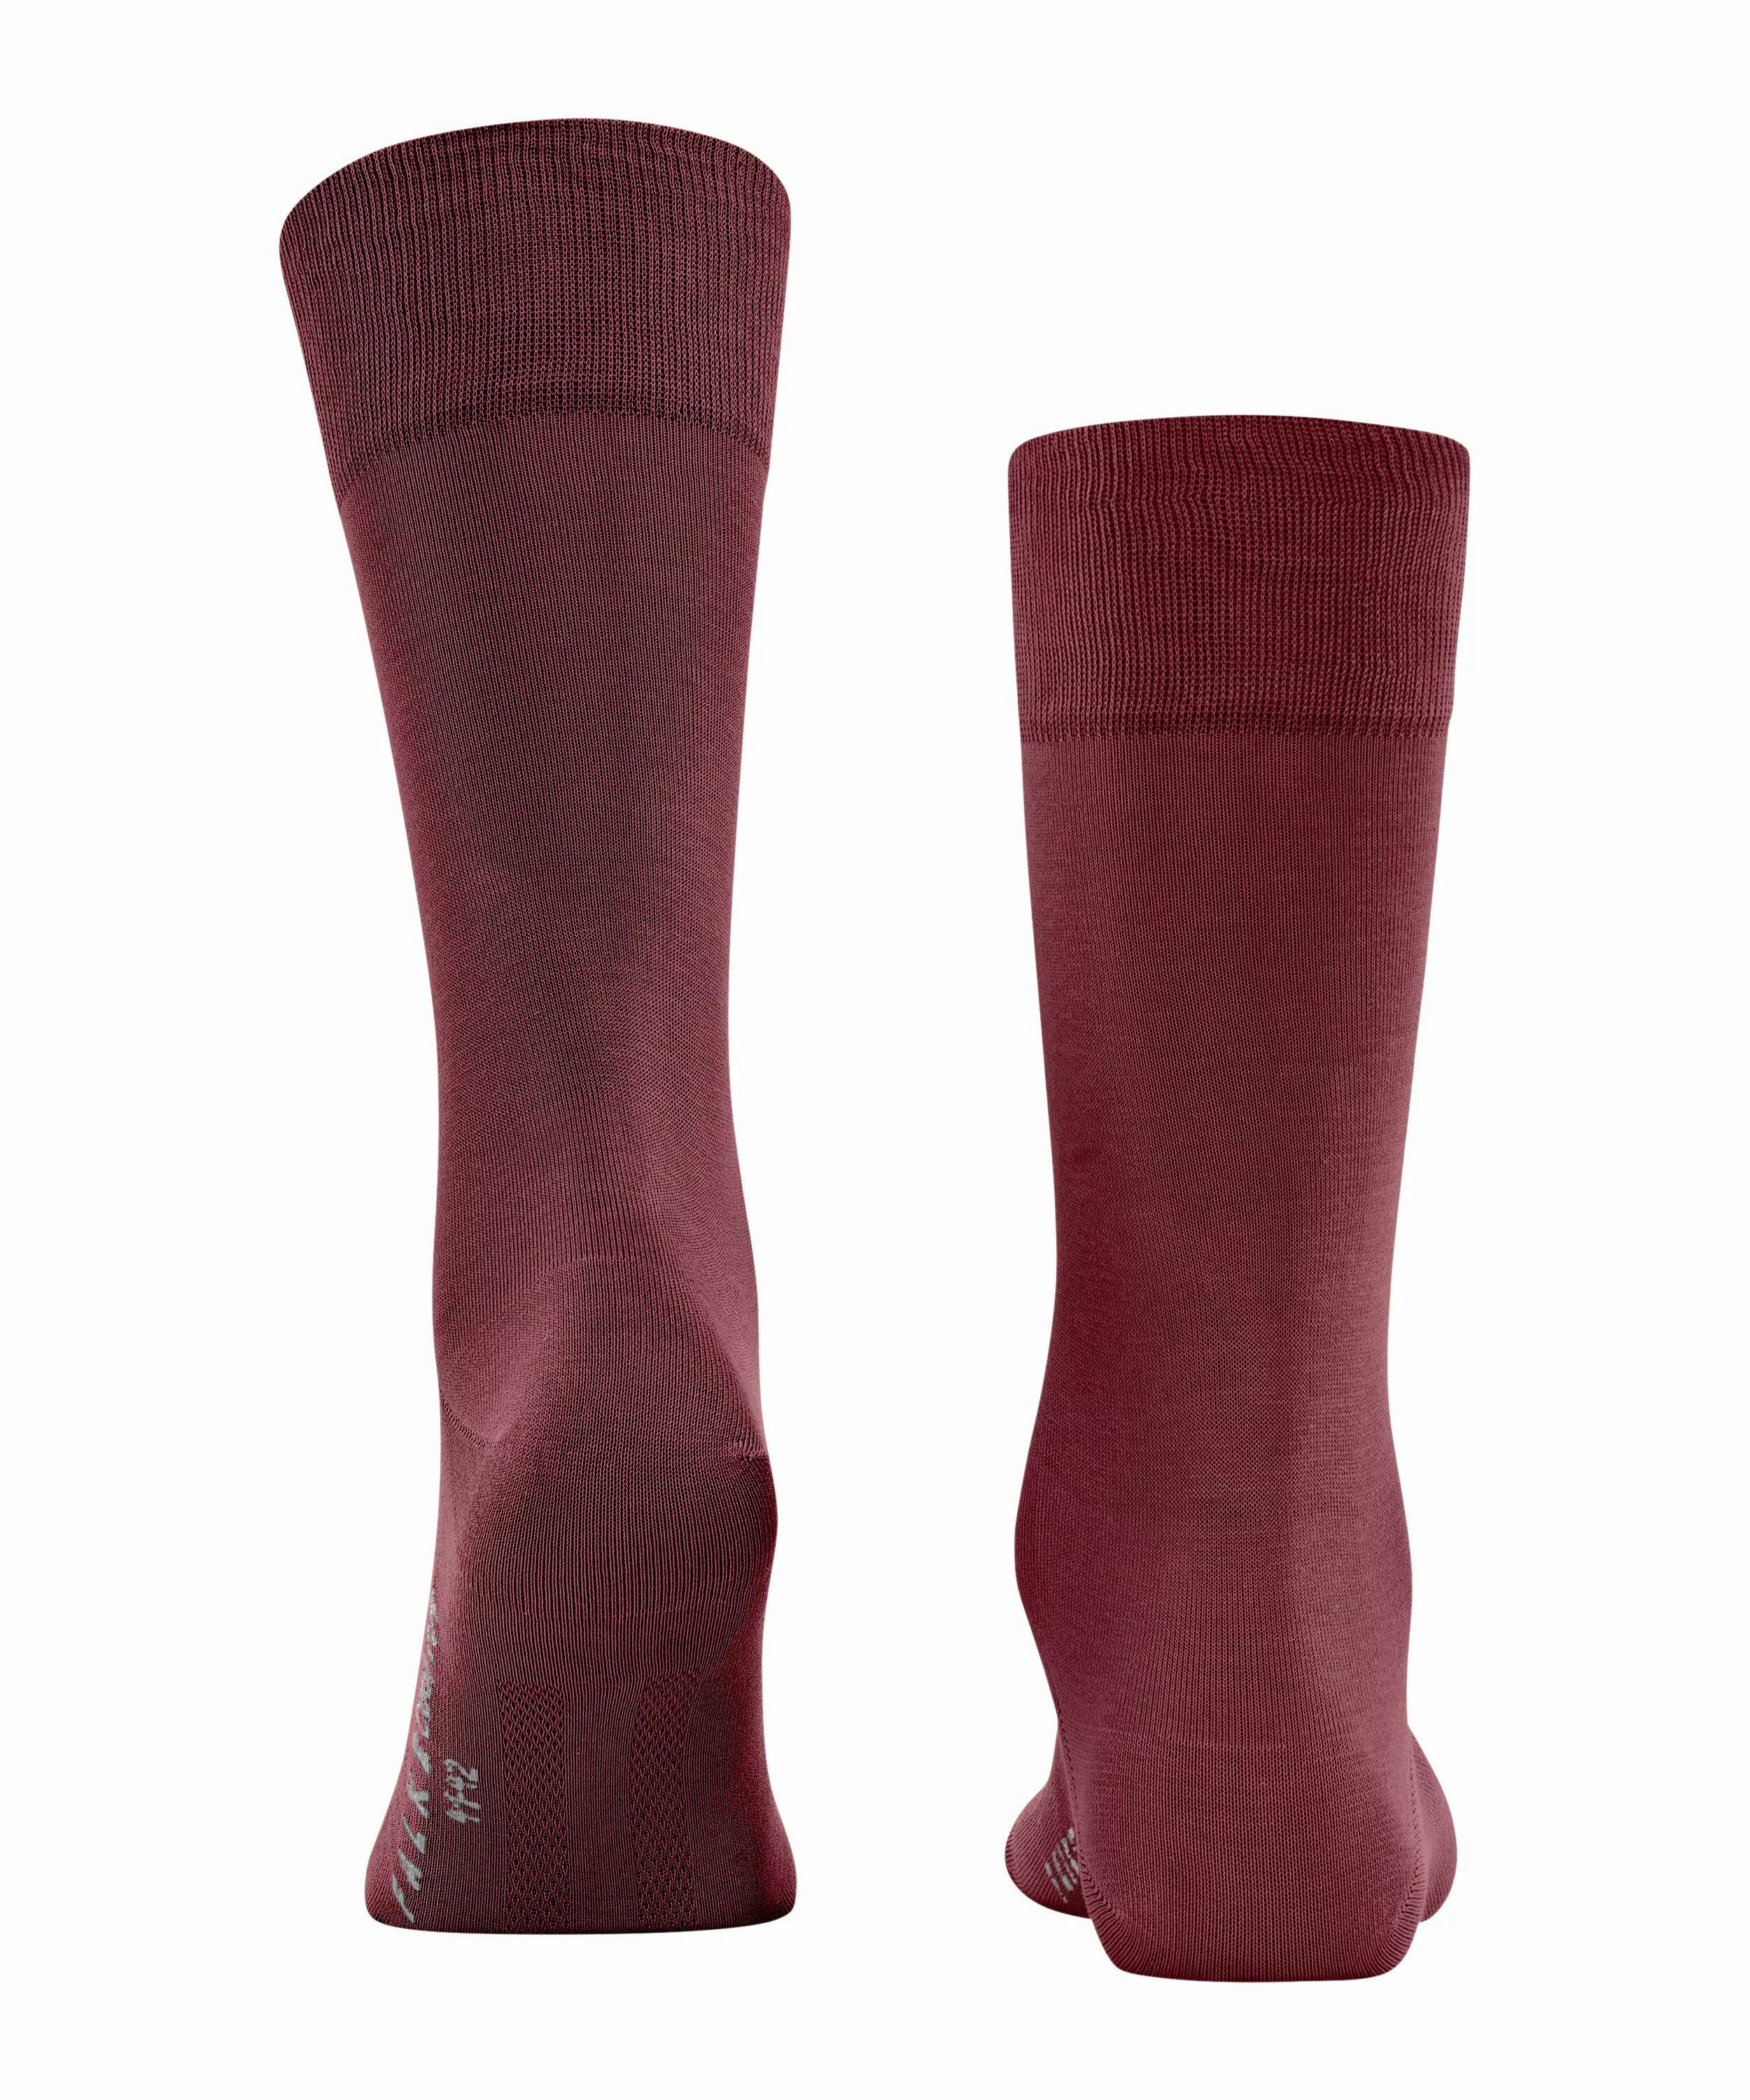 FALKE Cool 24/7 Herren Socken, 43-44, Rot, Uni, Baumwolle, 13230-841305 günstig online kaufen